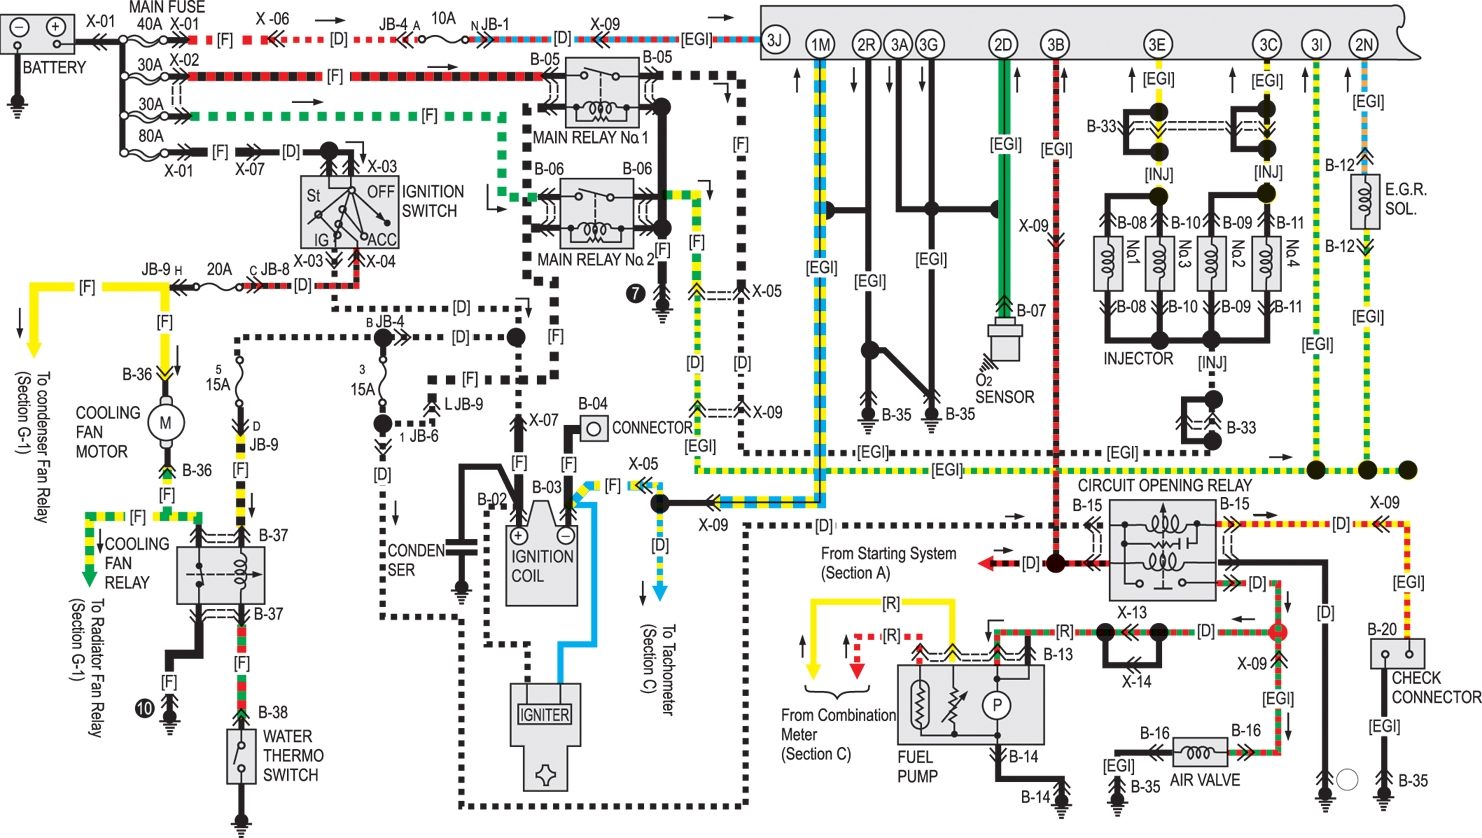 Mazda Car Pdf Manual Wiring Diagram, Mazda 121 Wiring Diagram Pdf